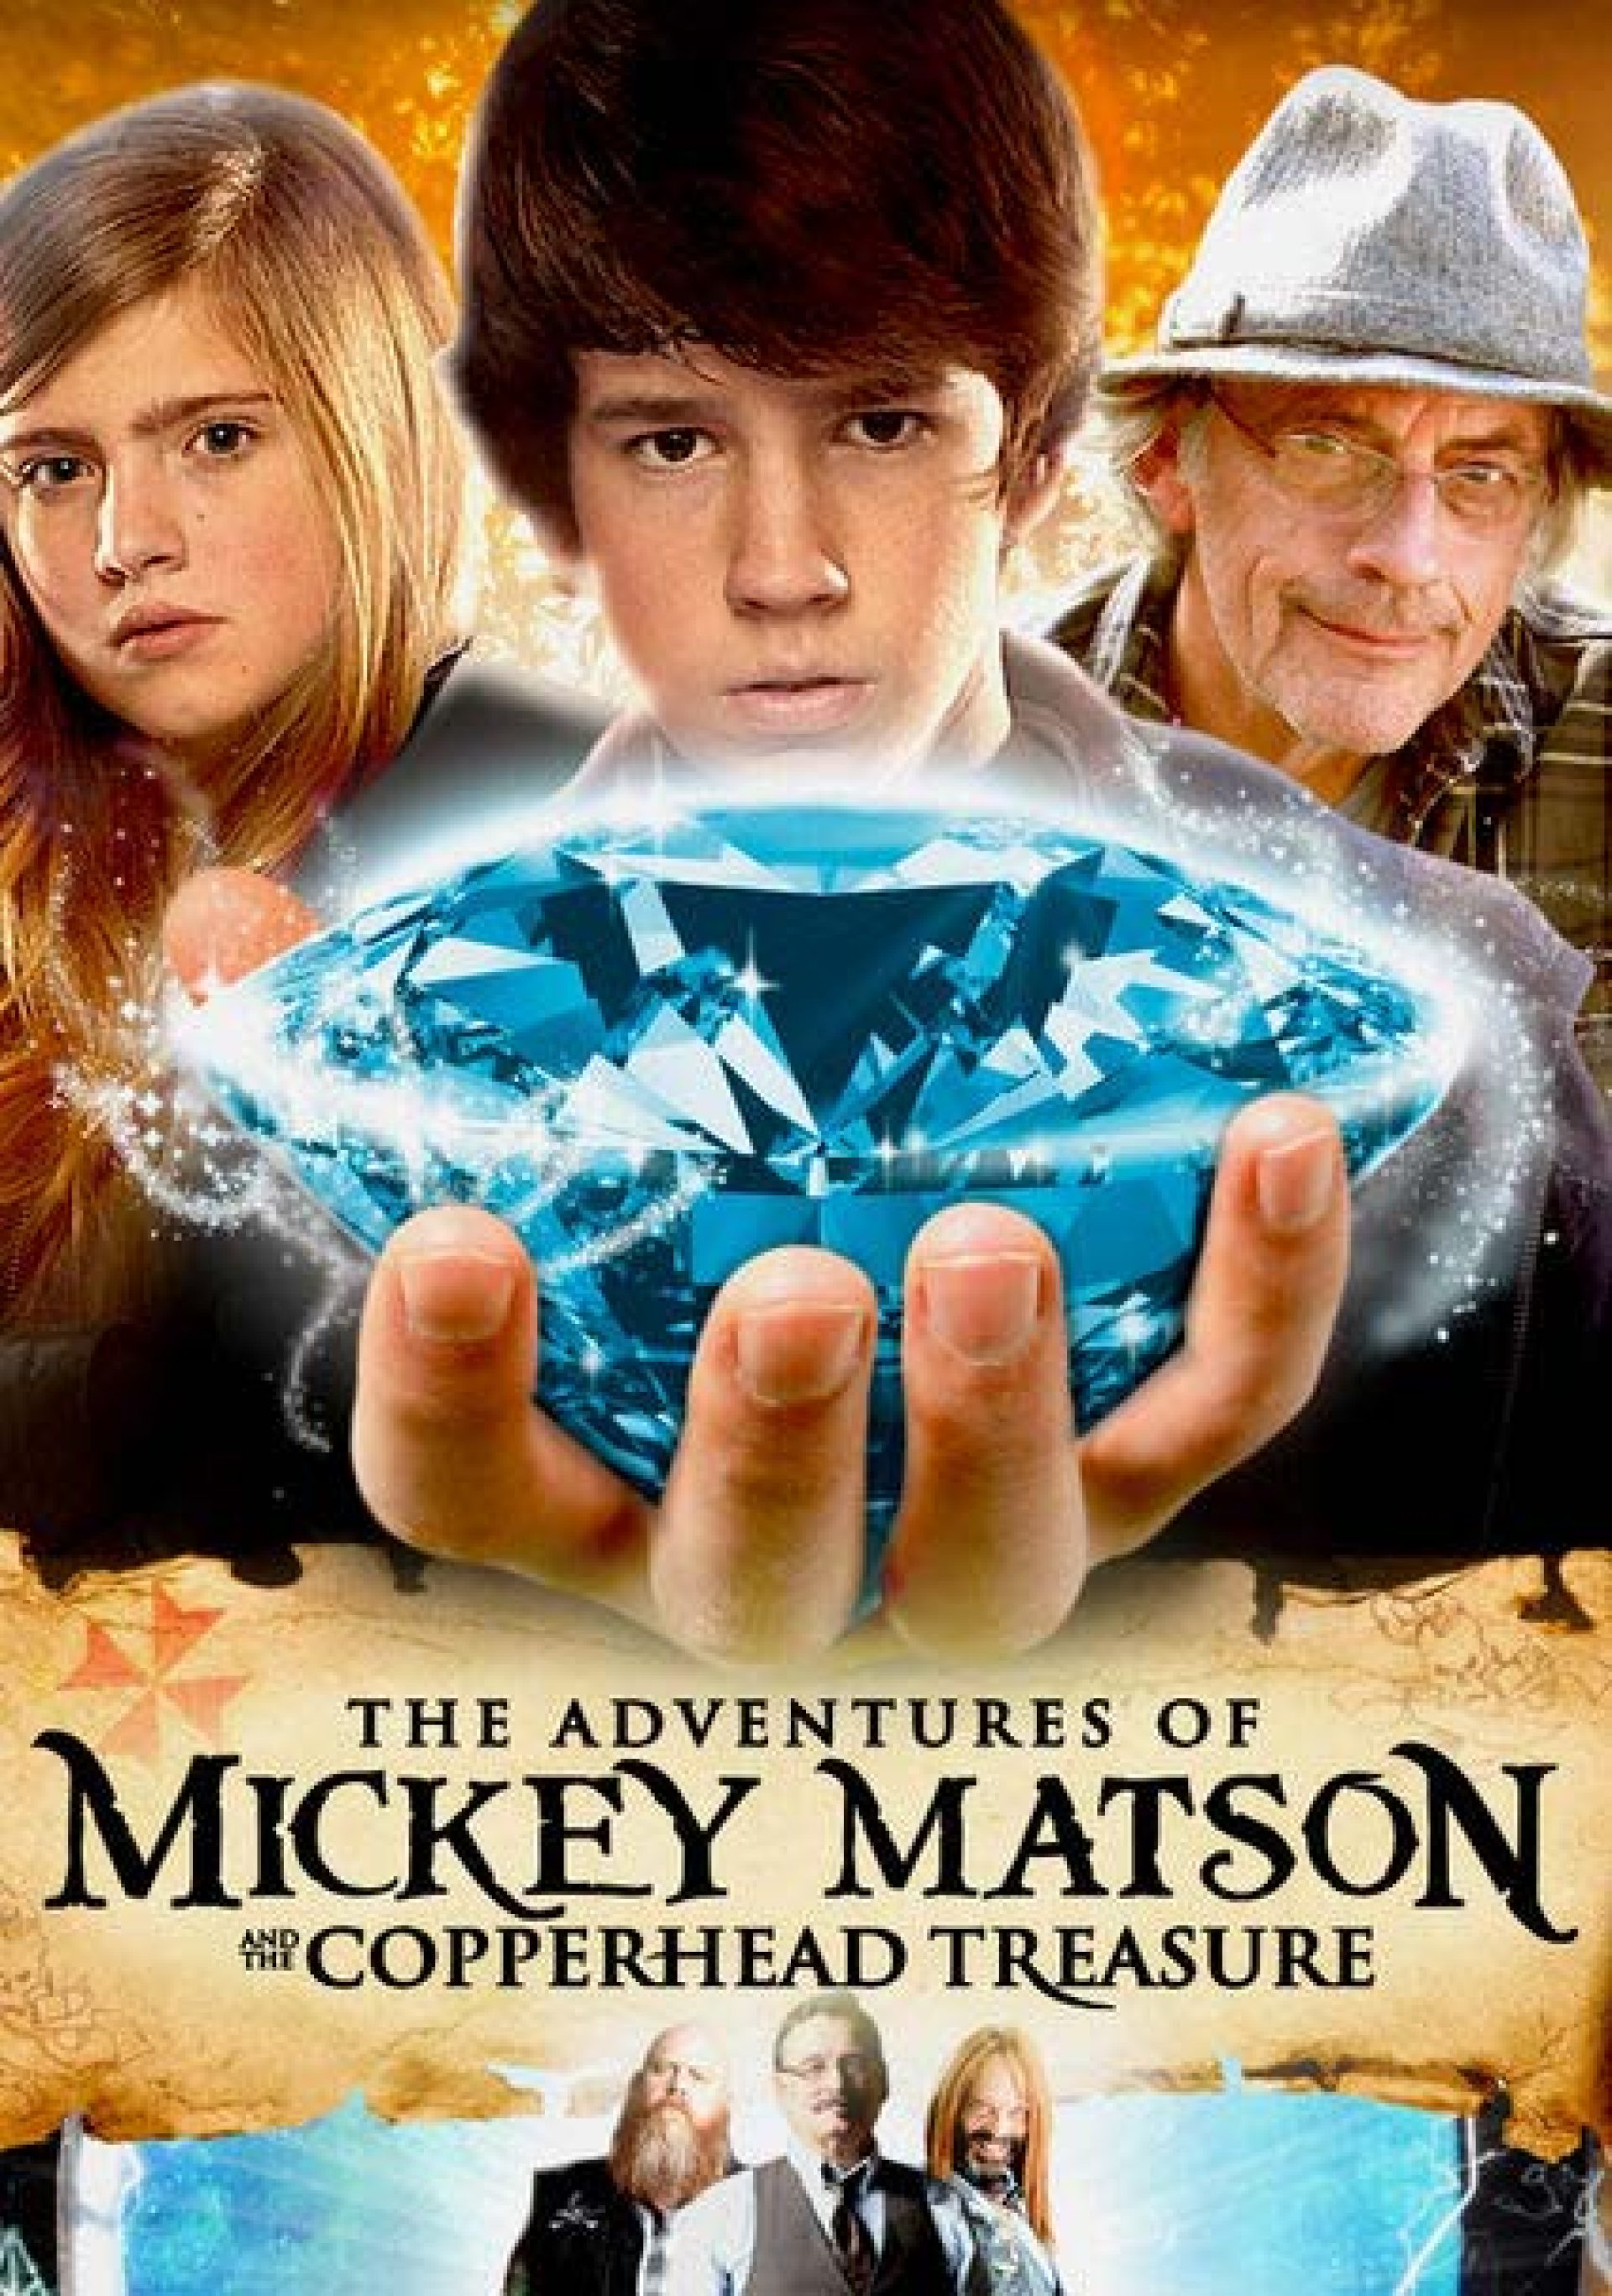 The Adventures of Mickey Matson